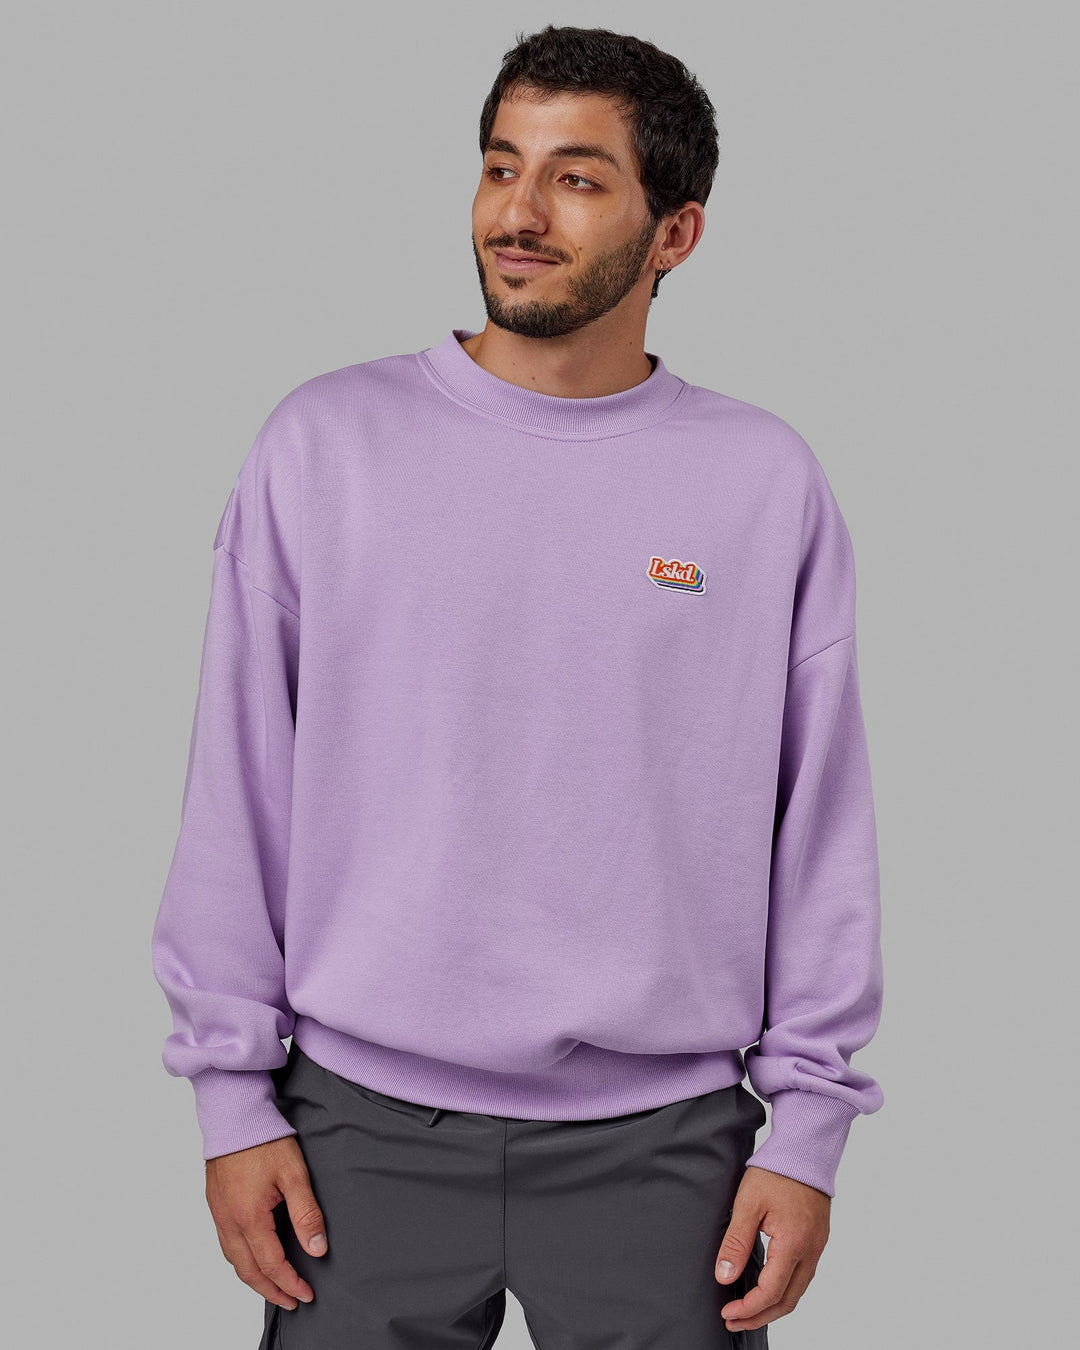 Man wearing Unisex Radiate Sweater Oversize - Pale Lilac